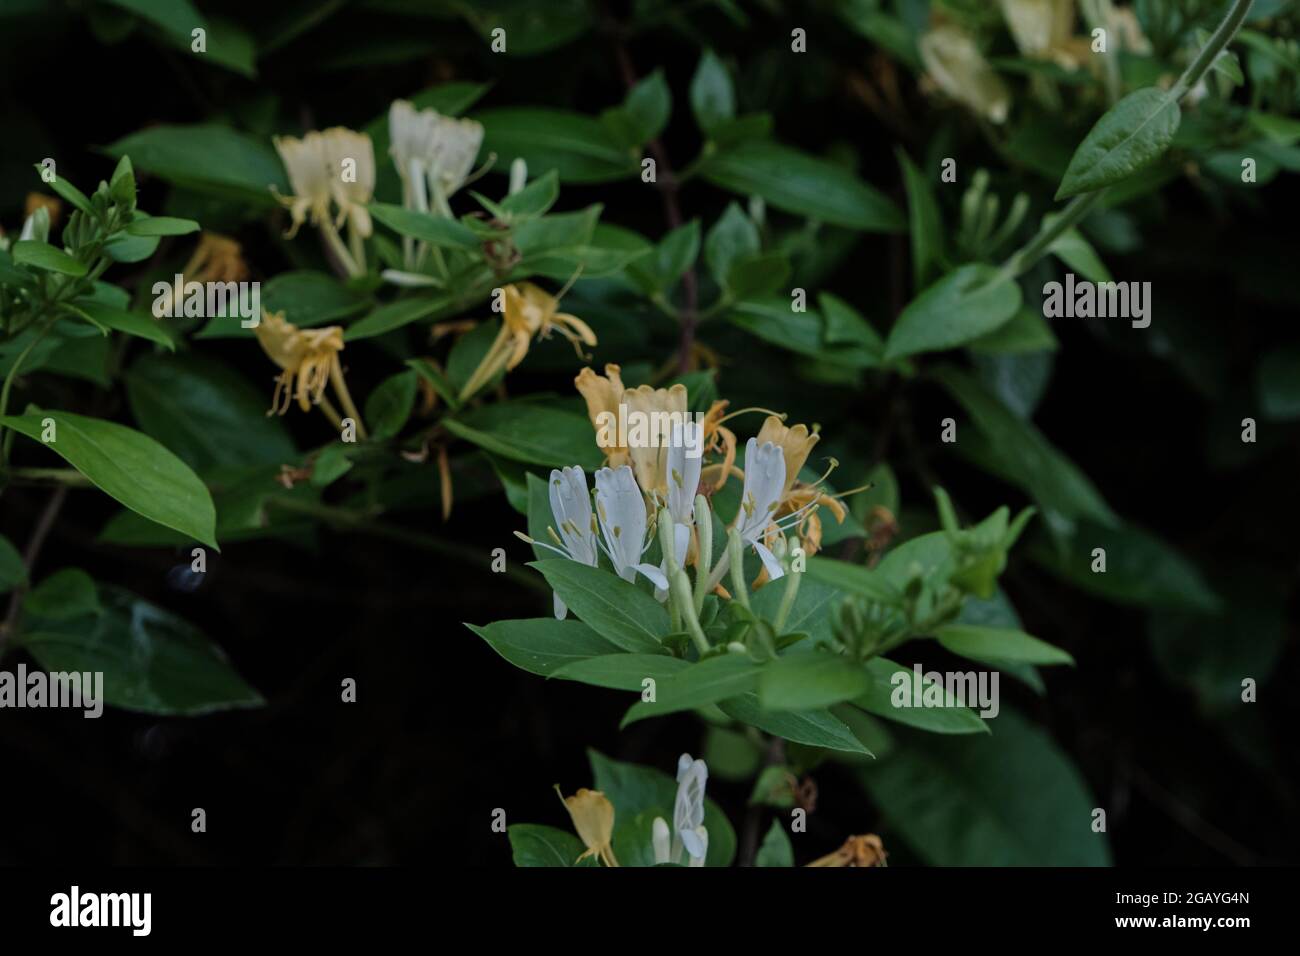 Lonicera periclymenum or common honeysuckle plants blooming flowers in spring Stock Photo